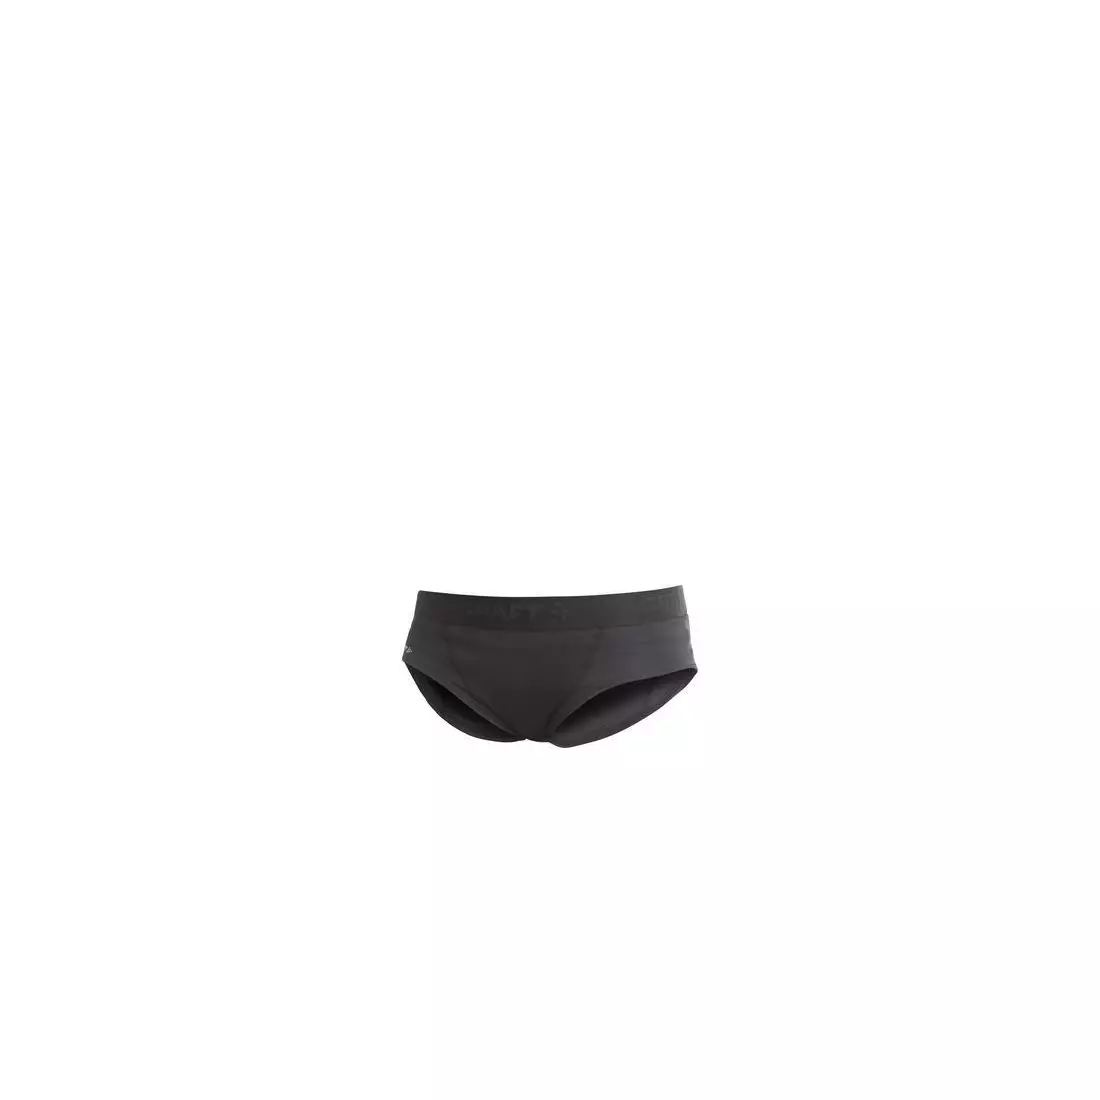 CRAFT BASIC - 2 pack - women's boxer shorts 1900725-9999